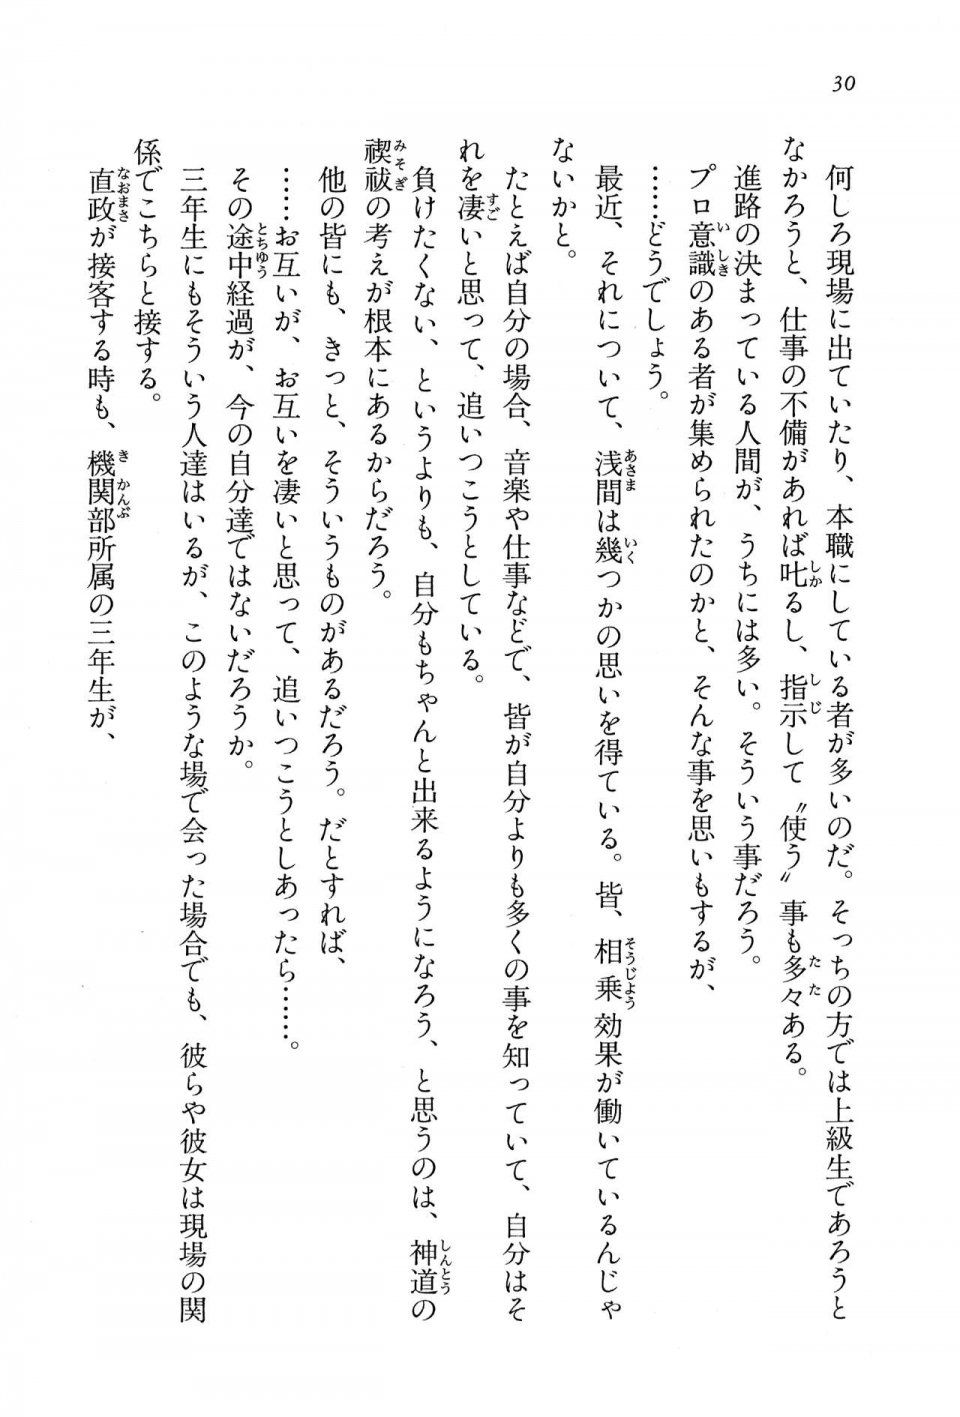 Kyoukai Senjou no Horizon BD Special Mininovel Vol 8(4B) - Photo #34